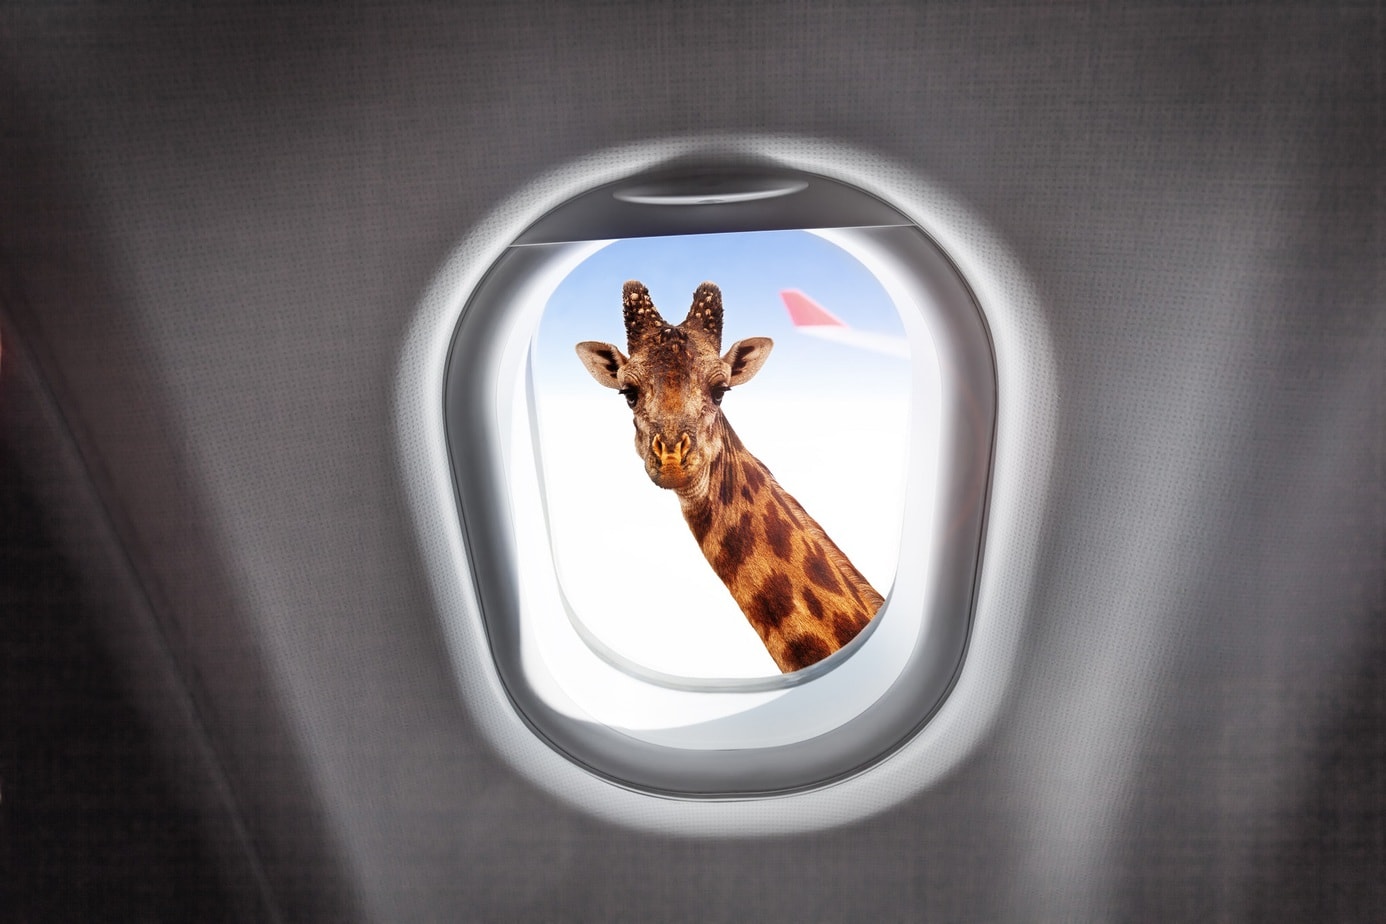 Giraffe looking through a plane’s window